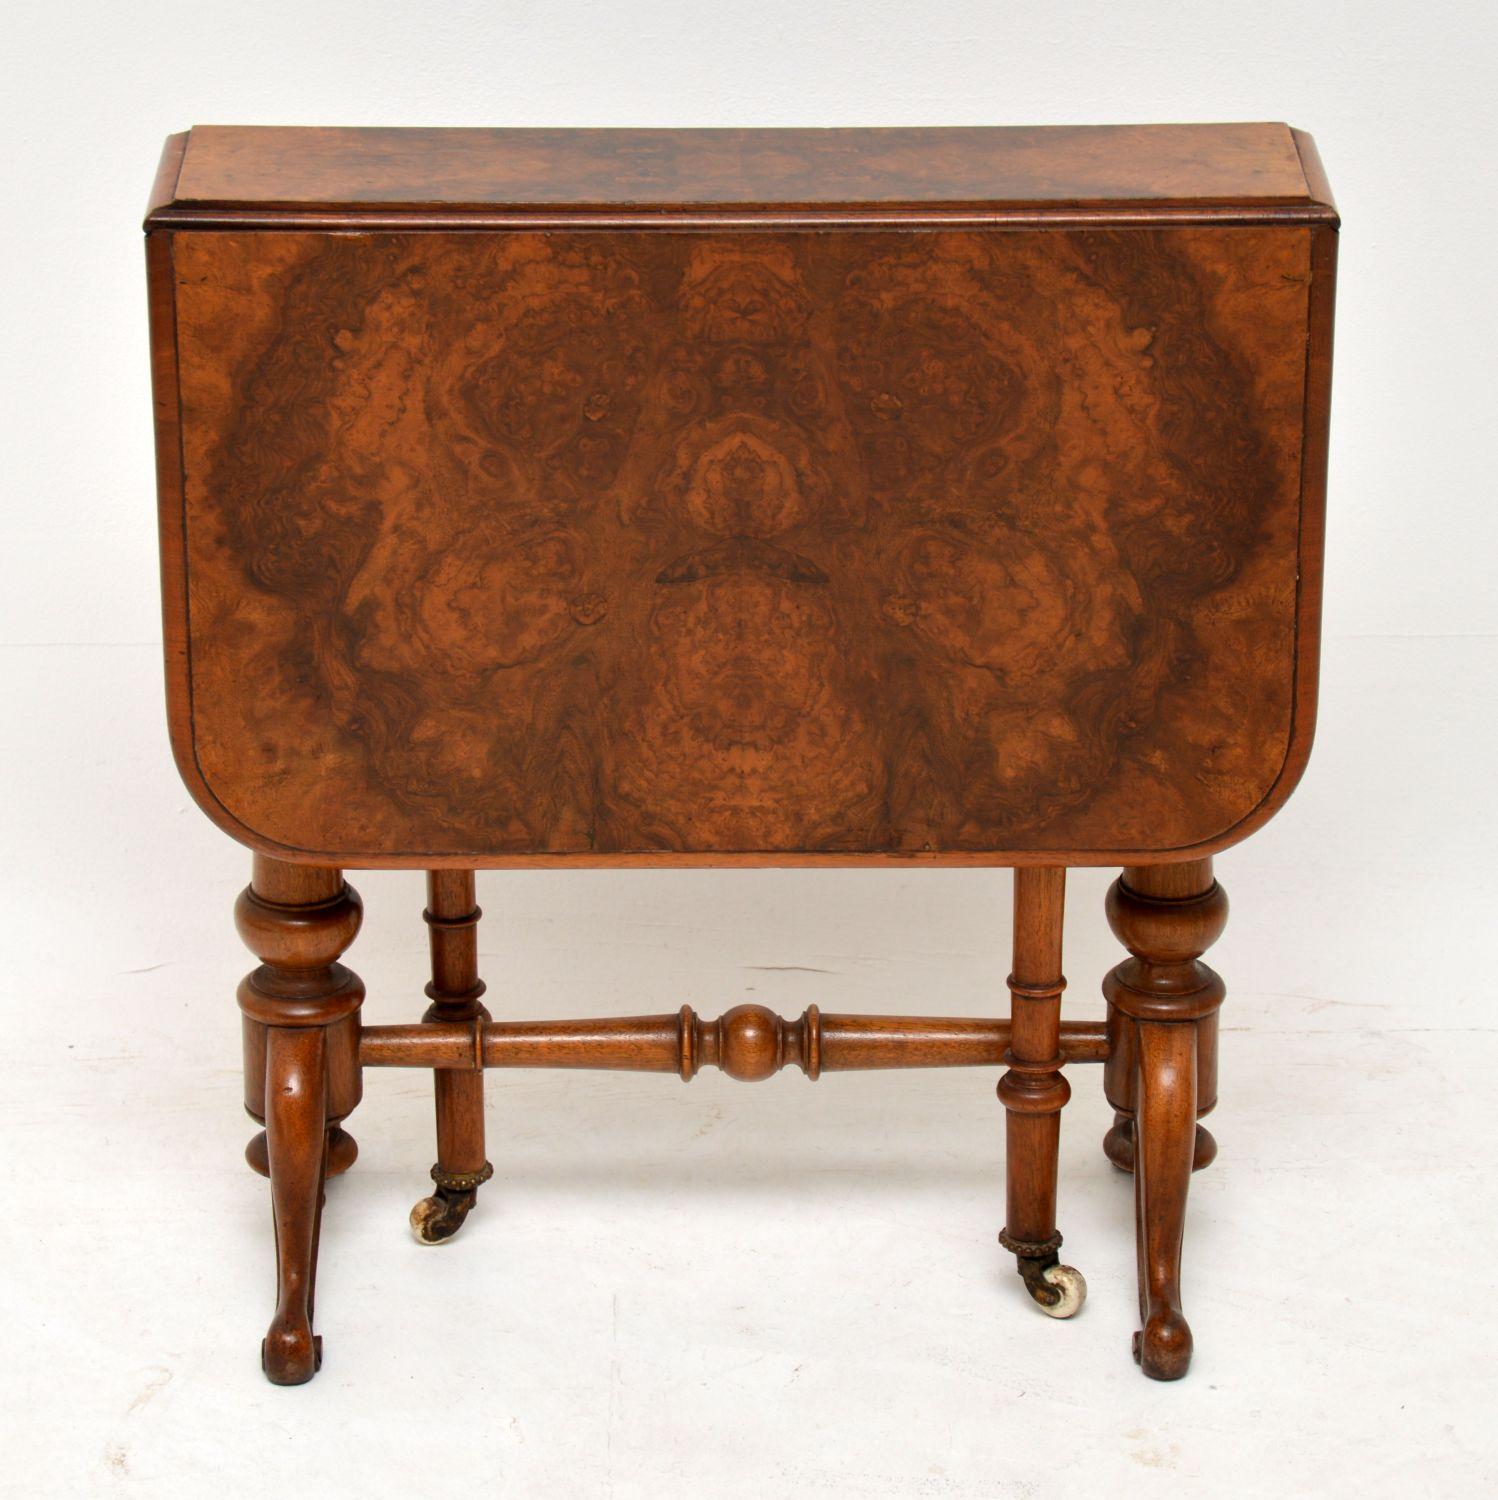 British Antique Burr Walnut Drop-Leaf Side Table